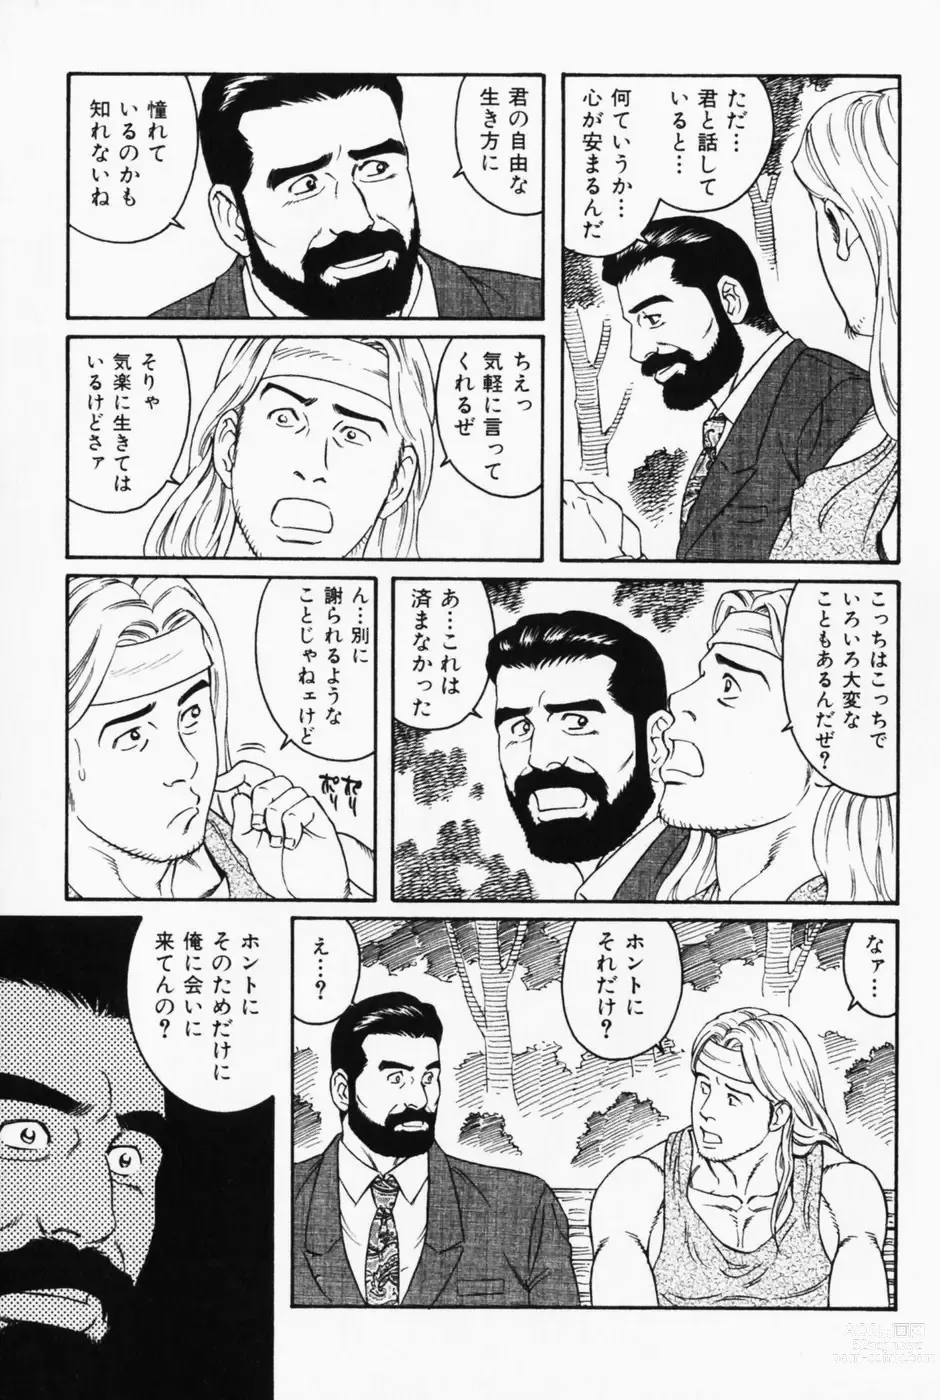 Page 5 of manga Shinkei-sei Ien